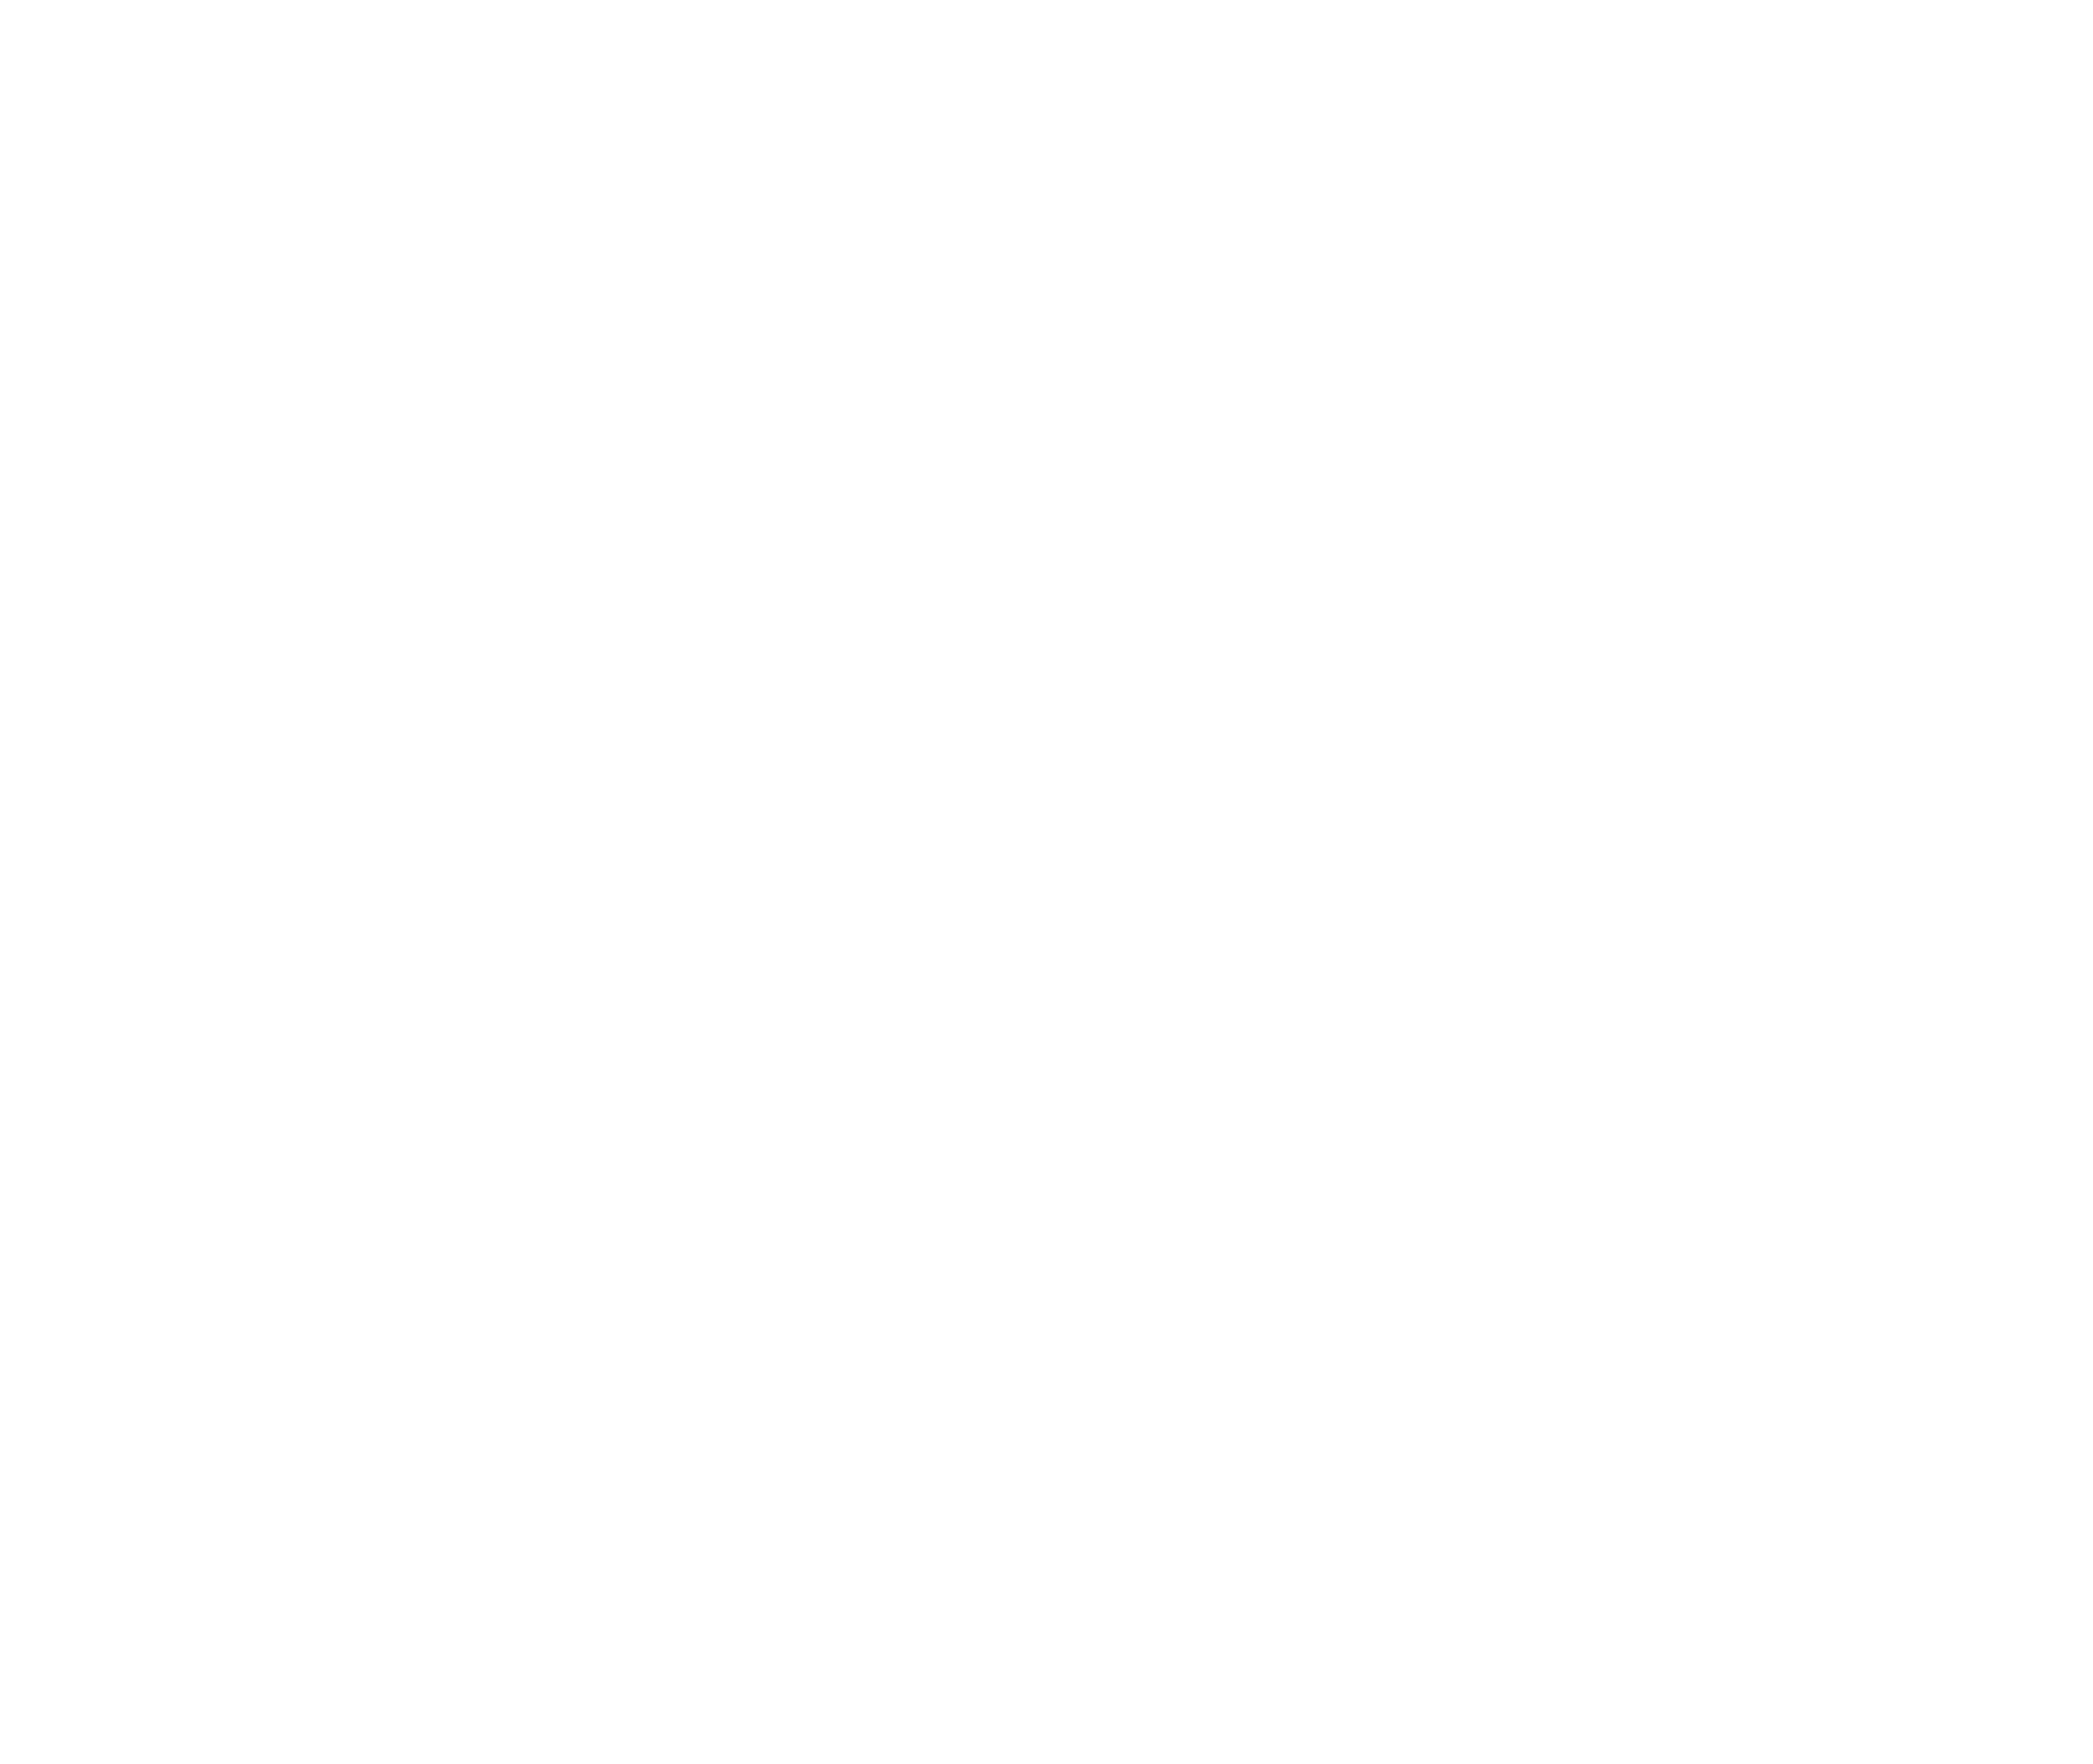 NYCars and Coffee